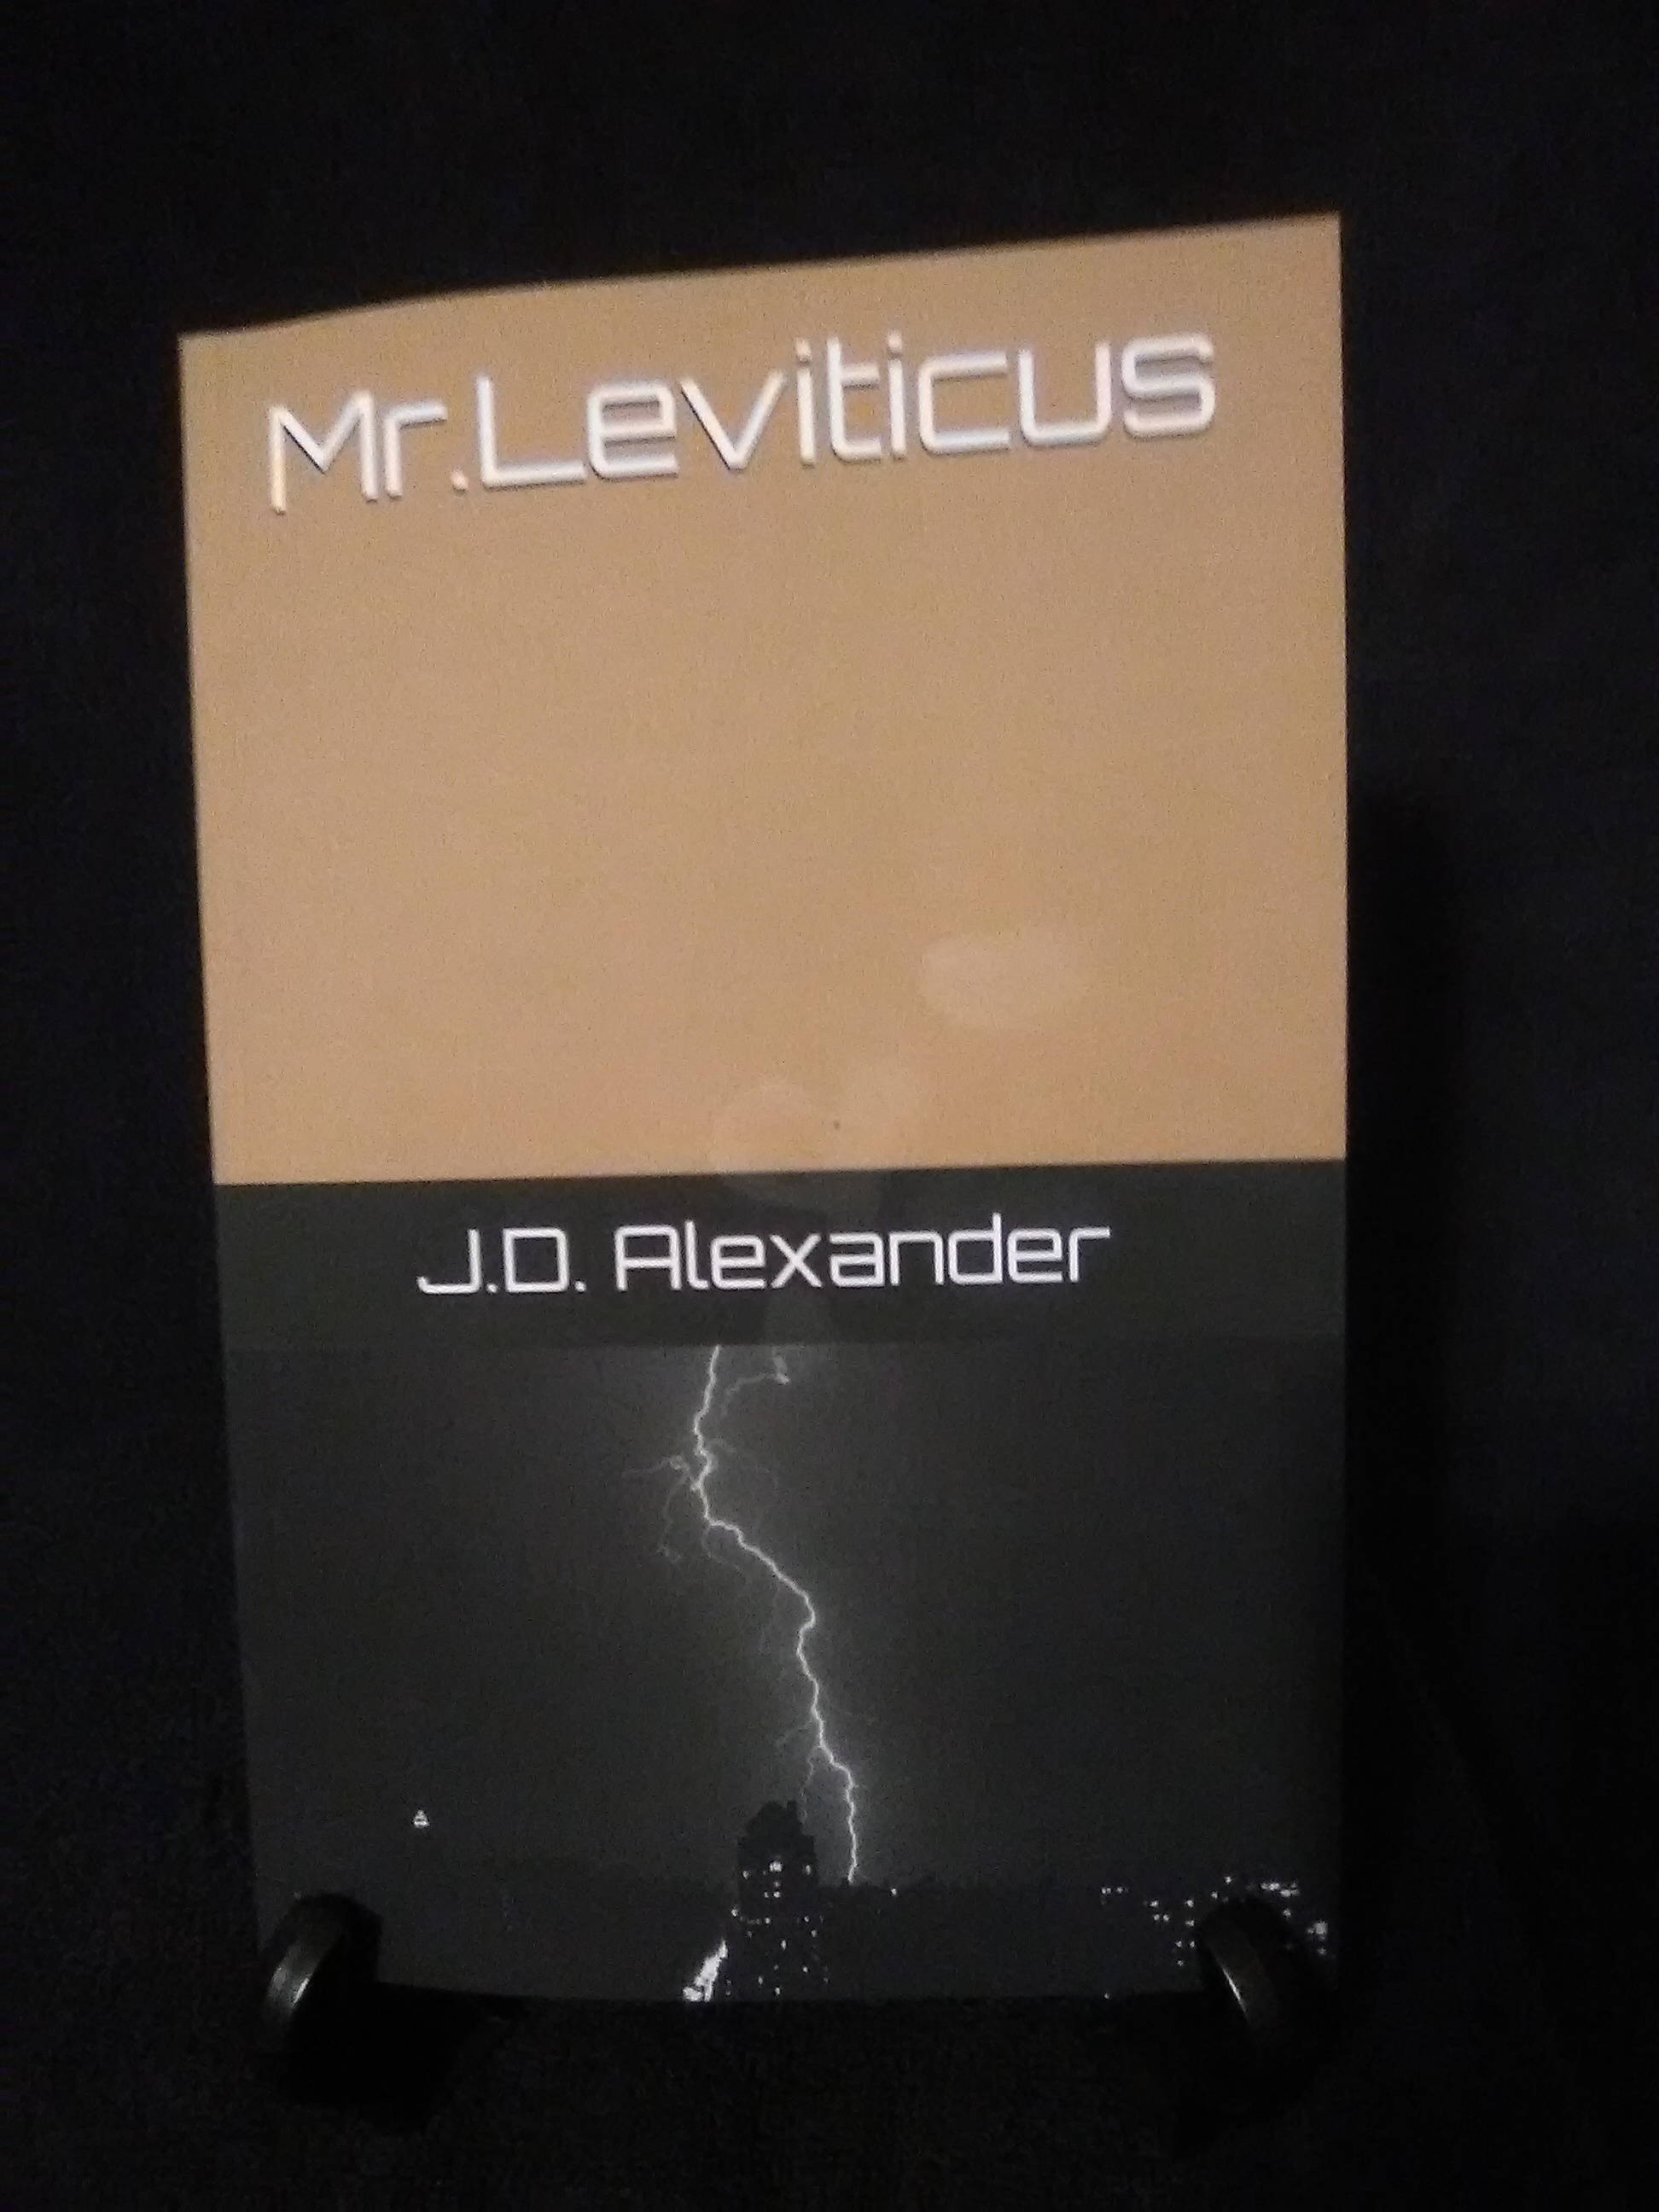 FREE: Mr. Leviticus by J.D. Alexander